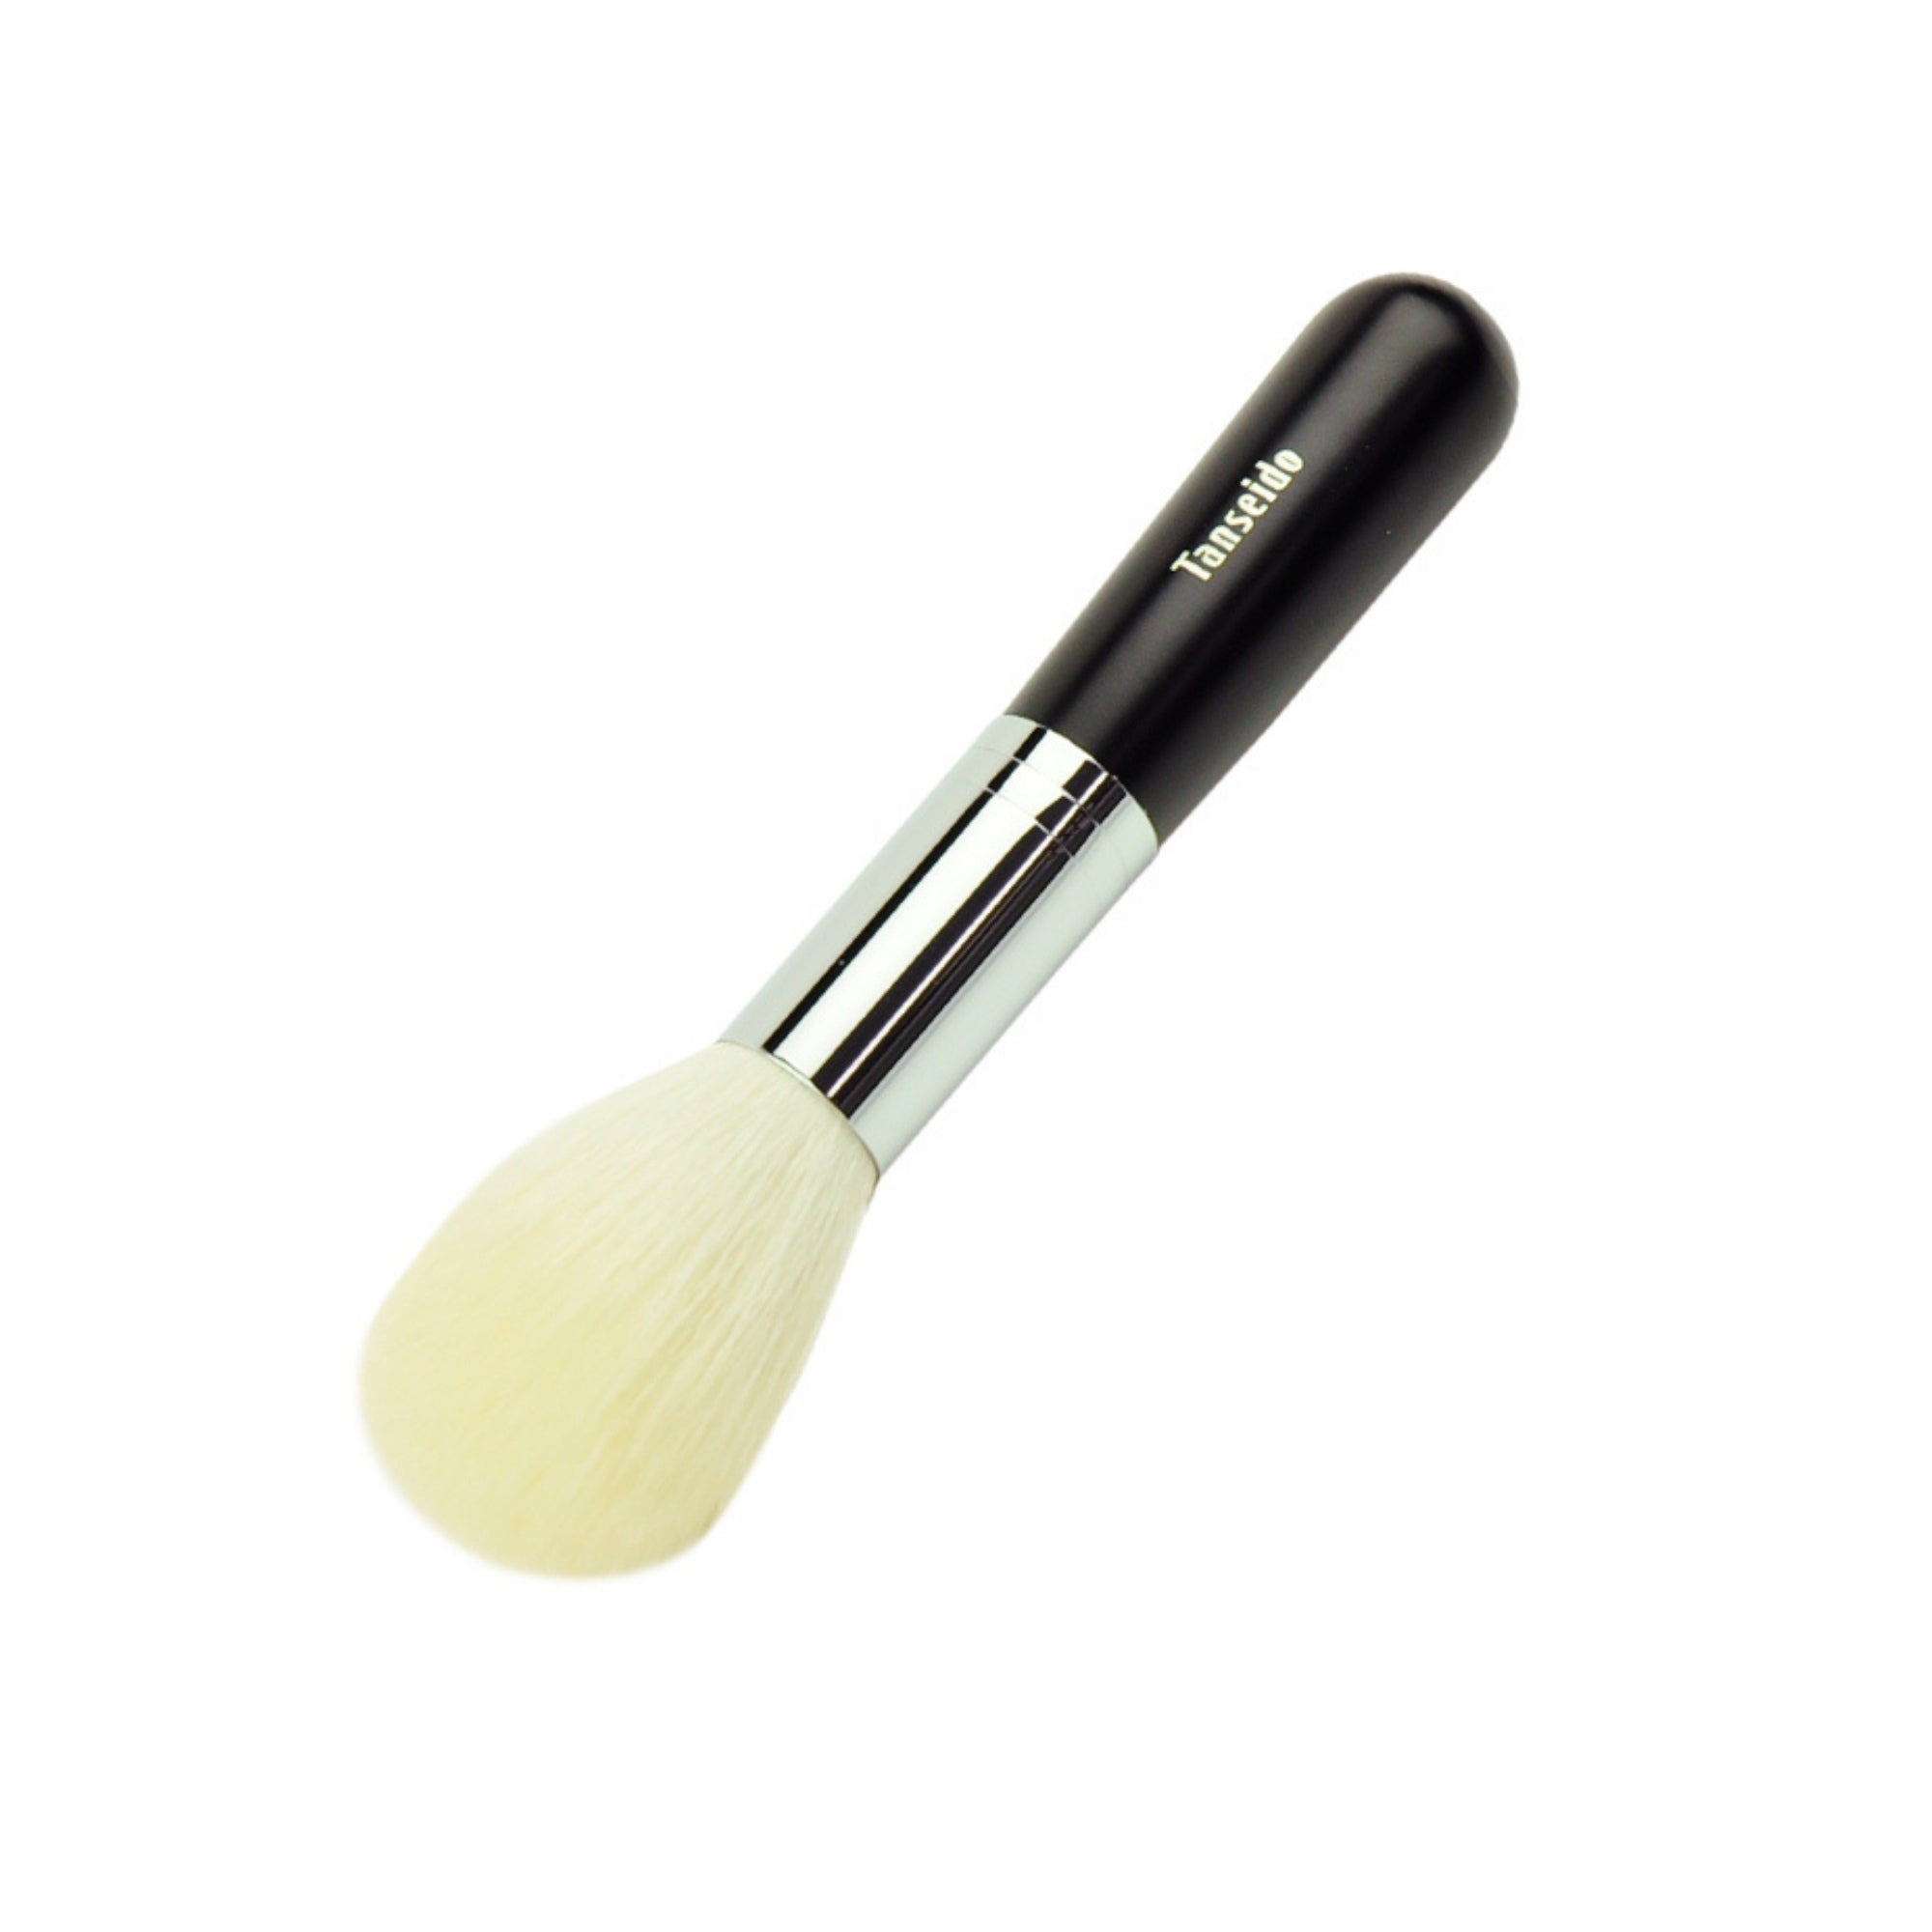 Tanseido JWC20 Cheek Brush - Fude Beauty, Japanese Makeup Brushes